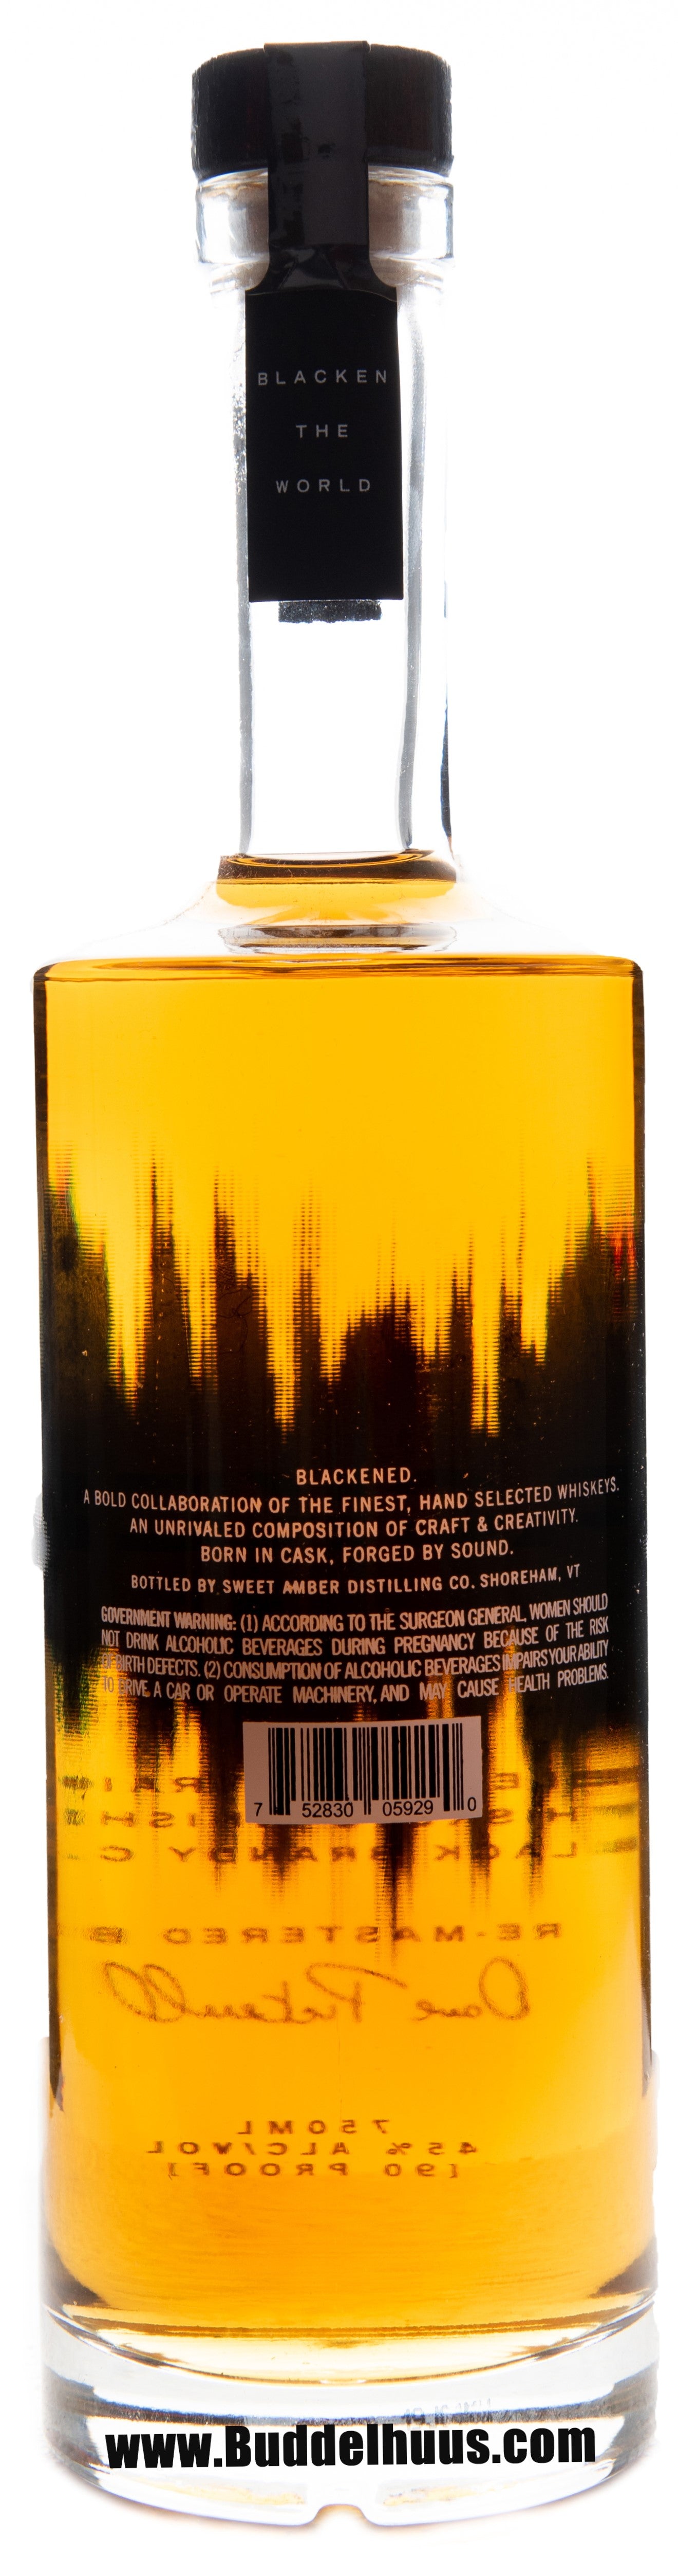 Blackened Whiskey Batch 127